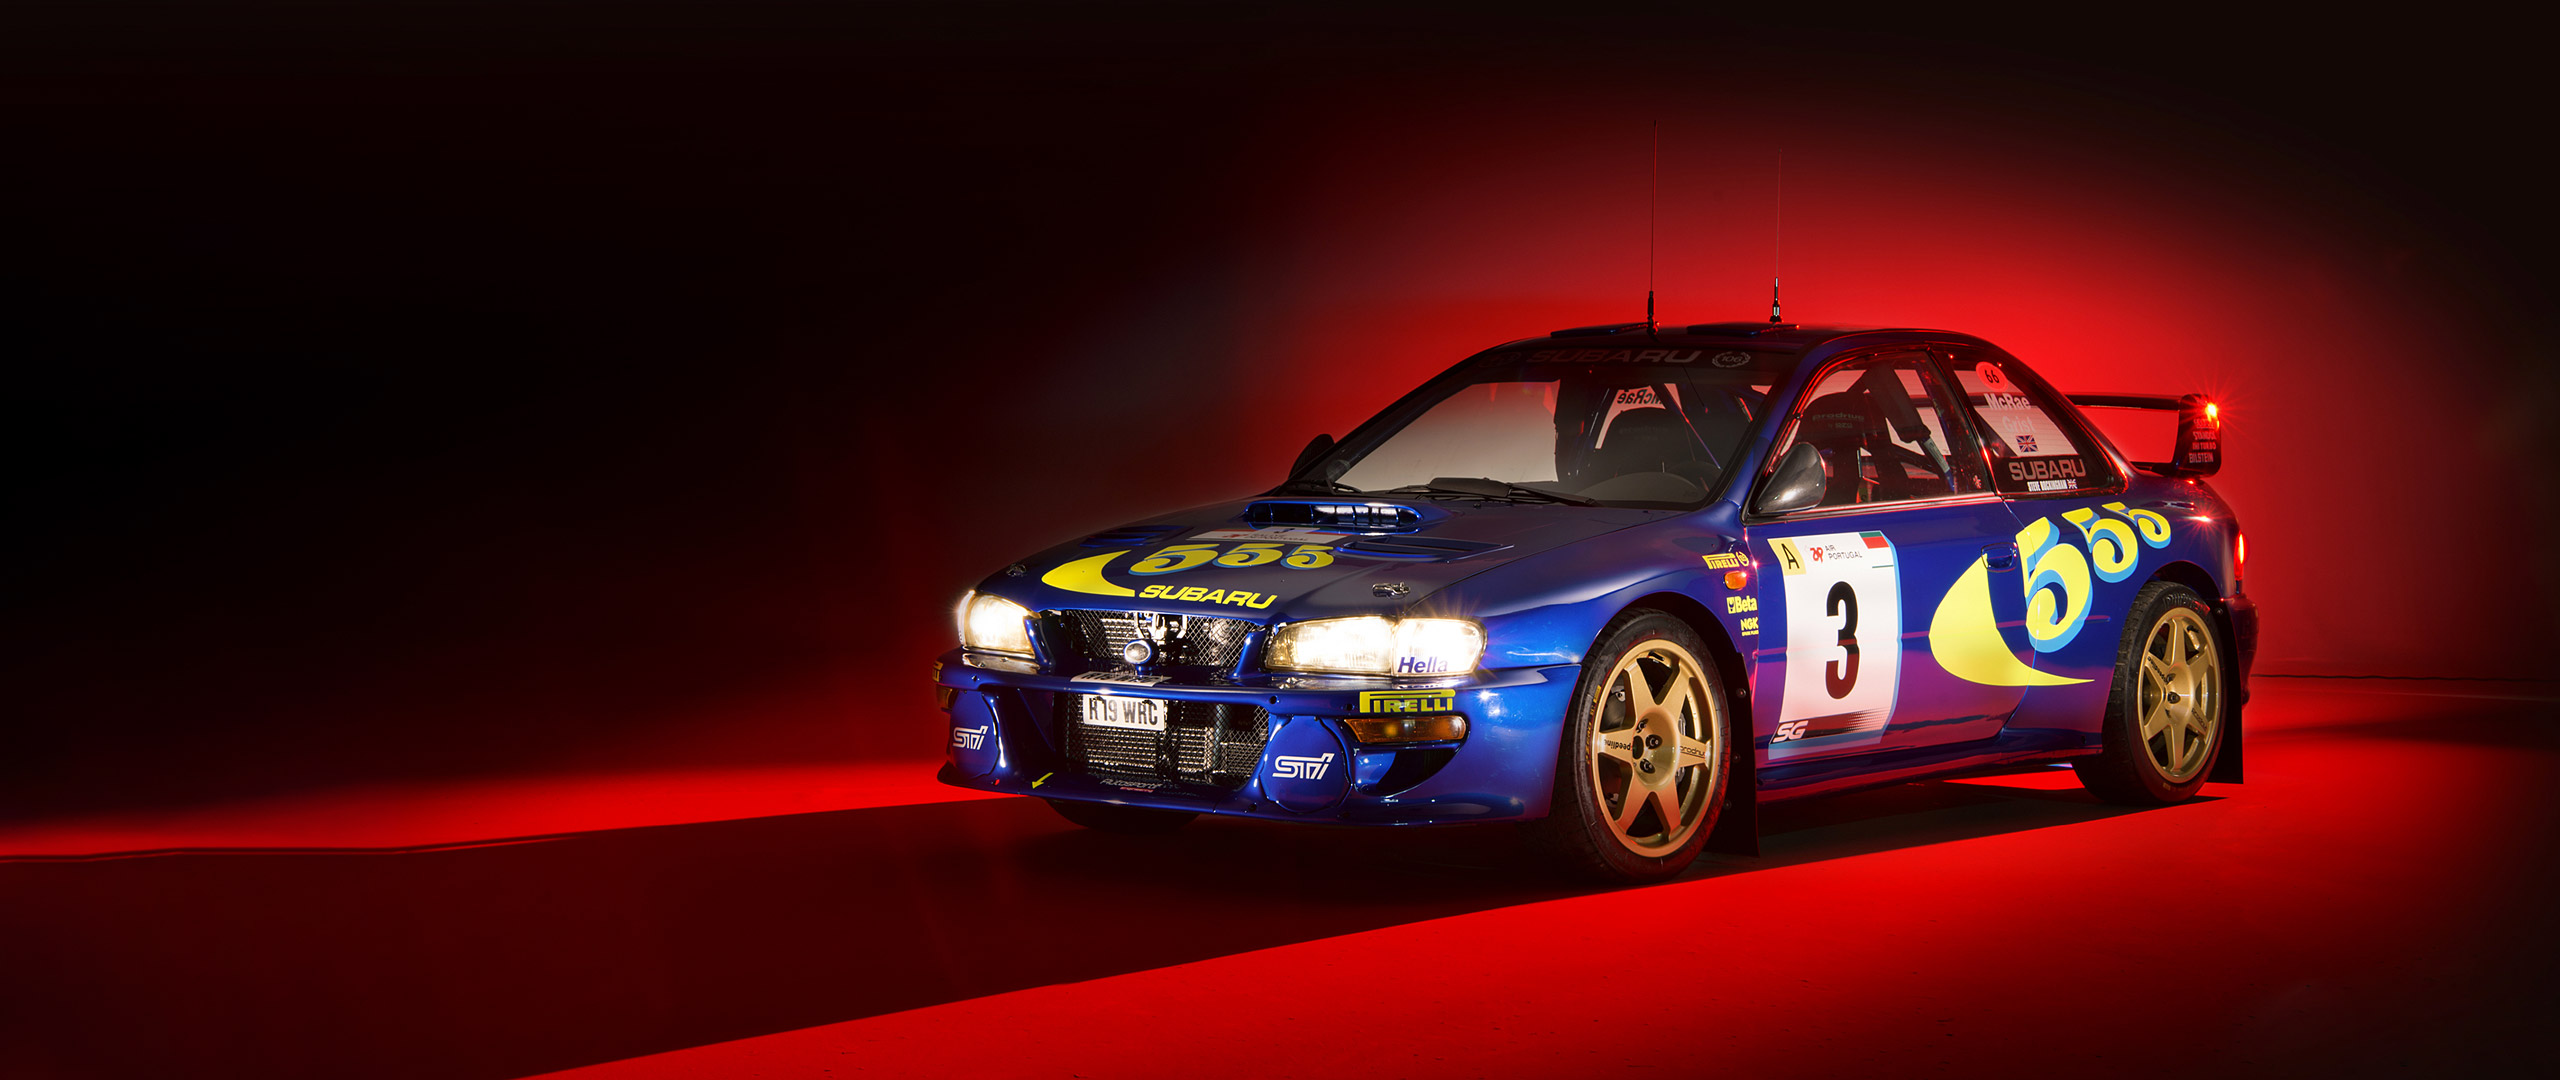  1997 Subaru Impreza WRC Wallpaper.